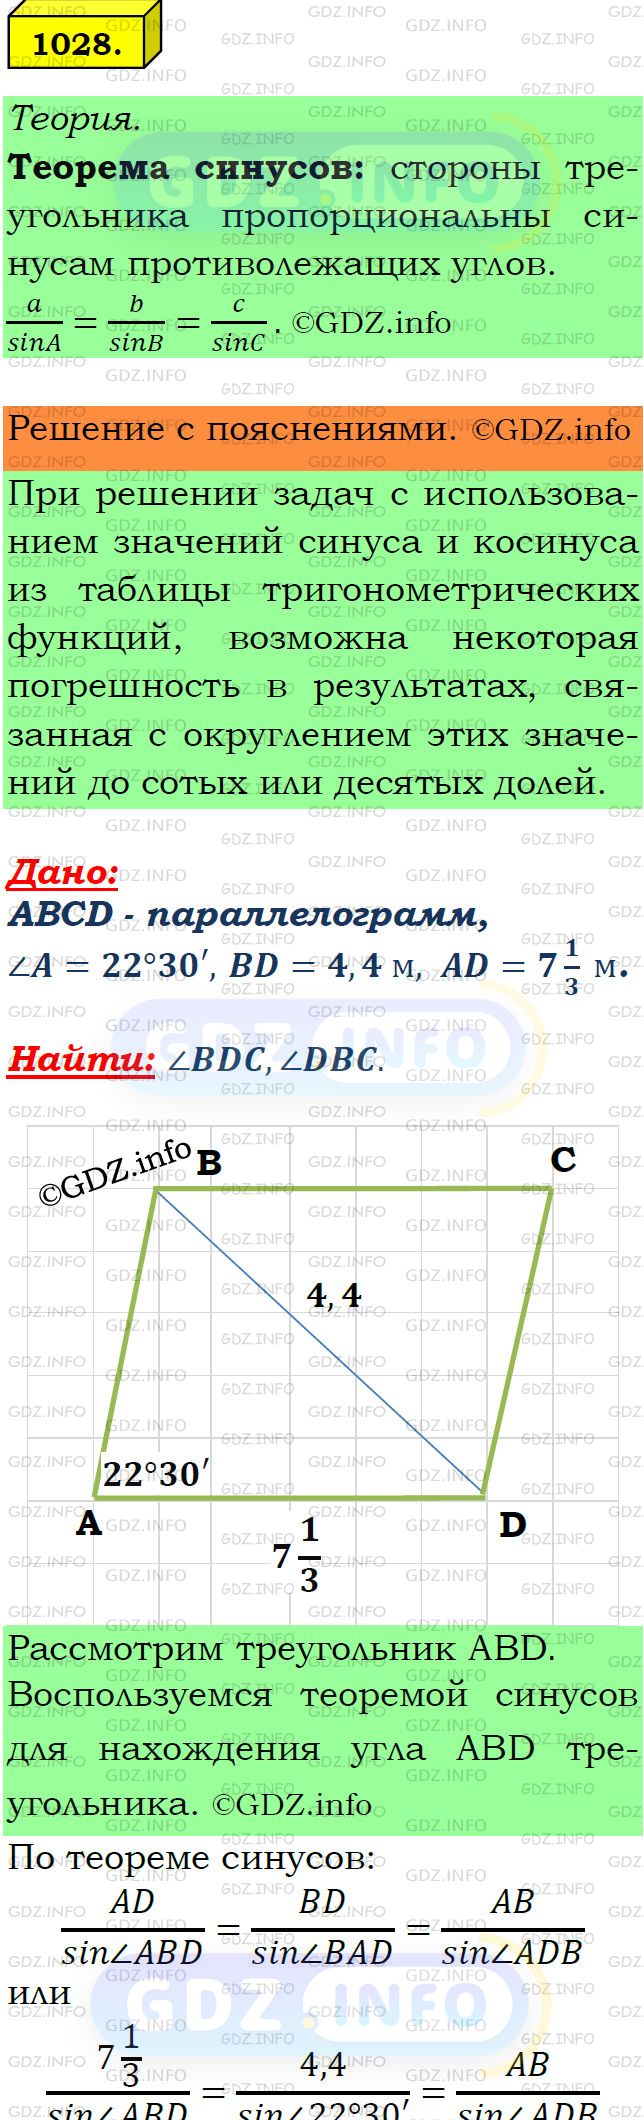 Фото подробного решения: Номер №1028 из ГДЗ по Геометрии 7-9 класс: Атанасян Л.С.